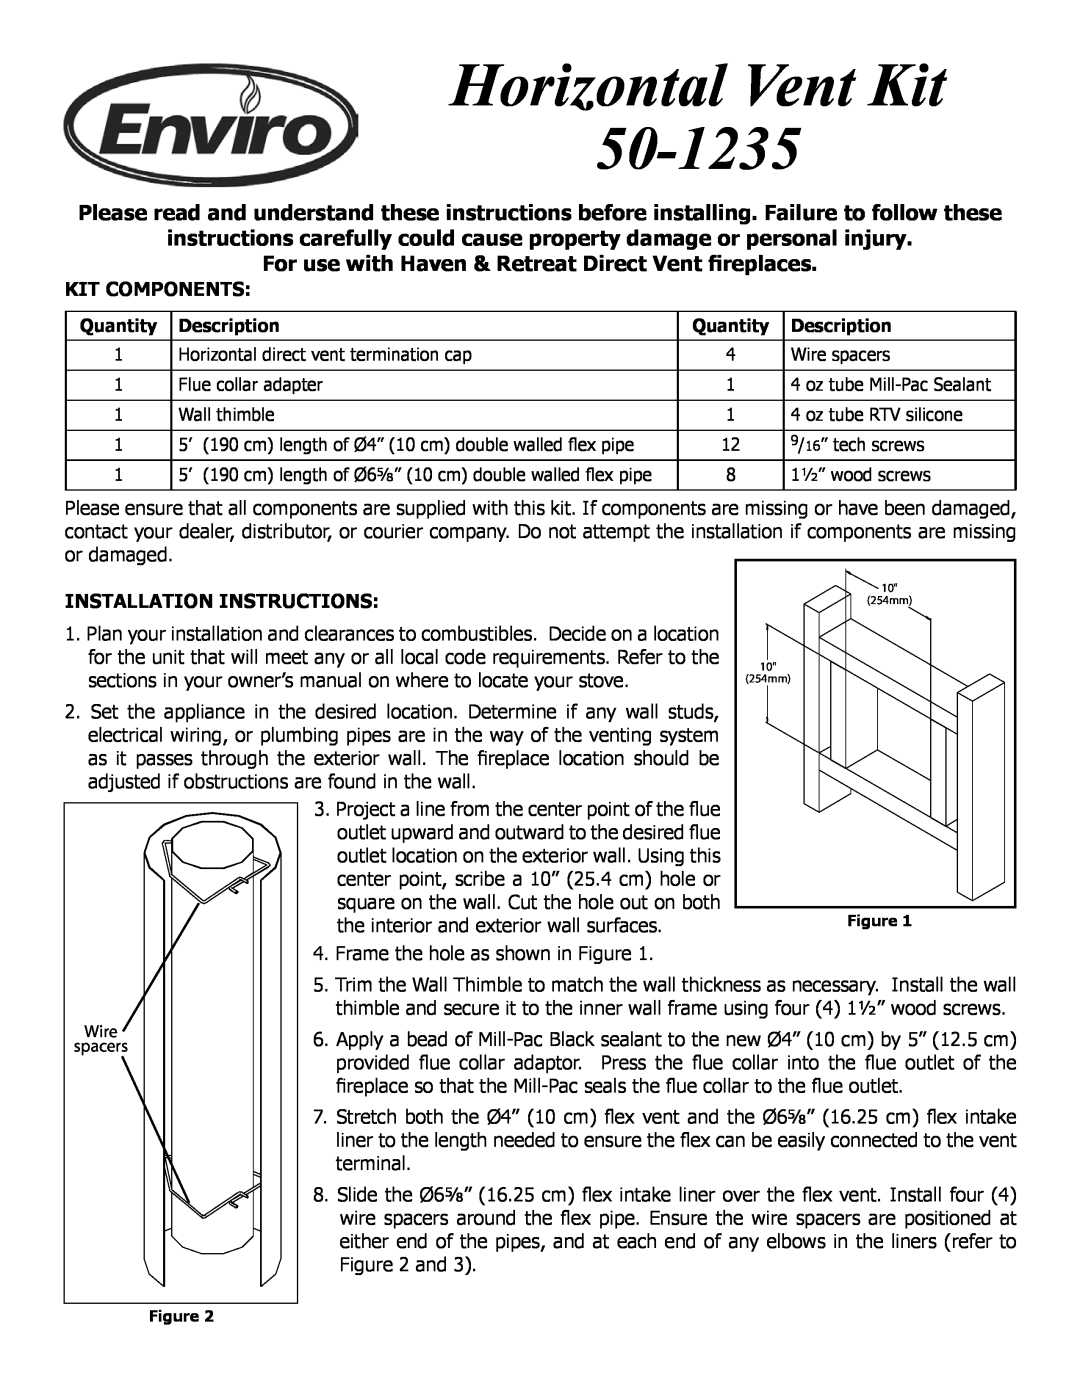 Enviro 50-1235 installation instructions Horizontal Vent Kit, Kit Components 